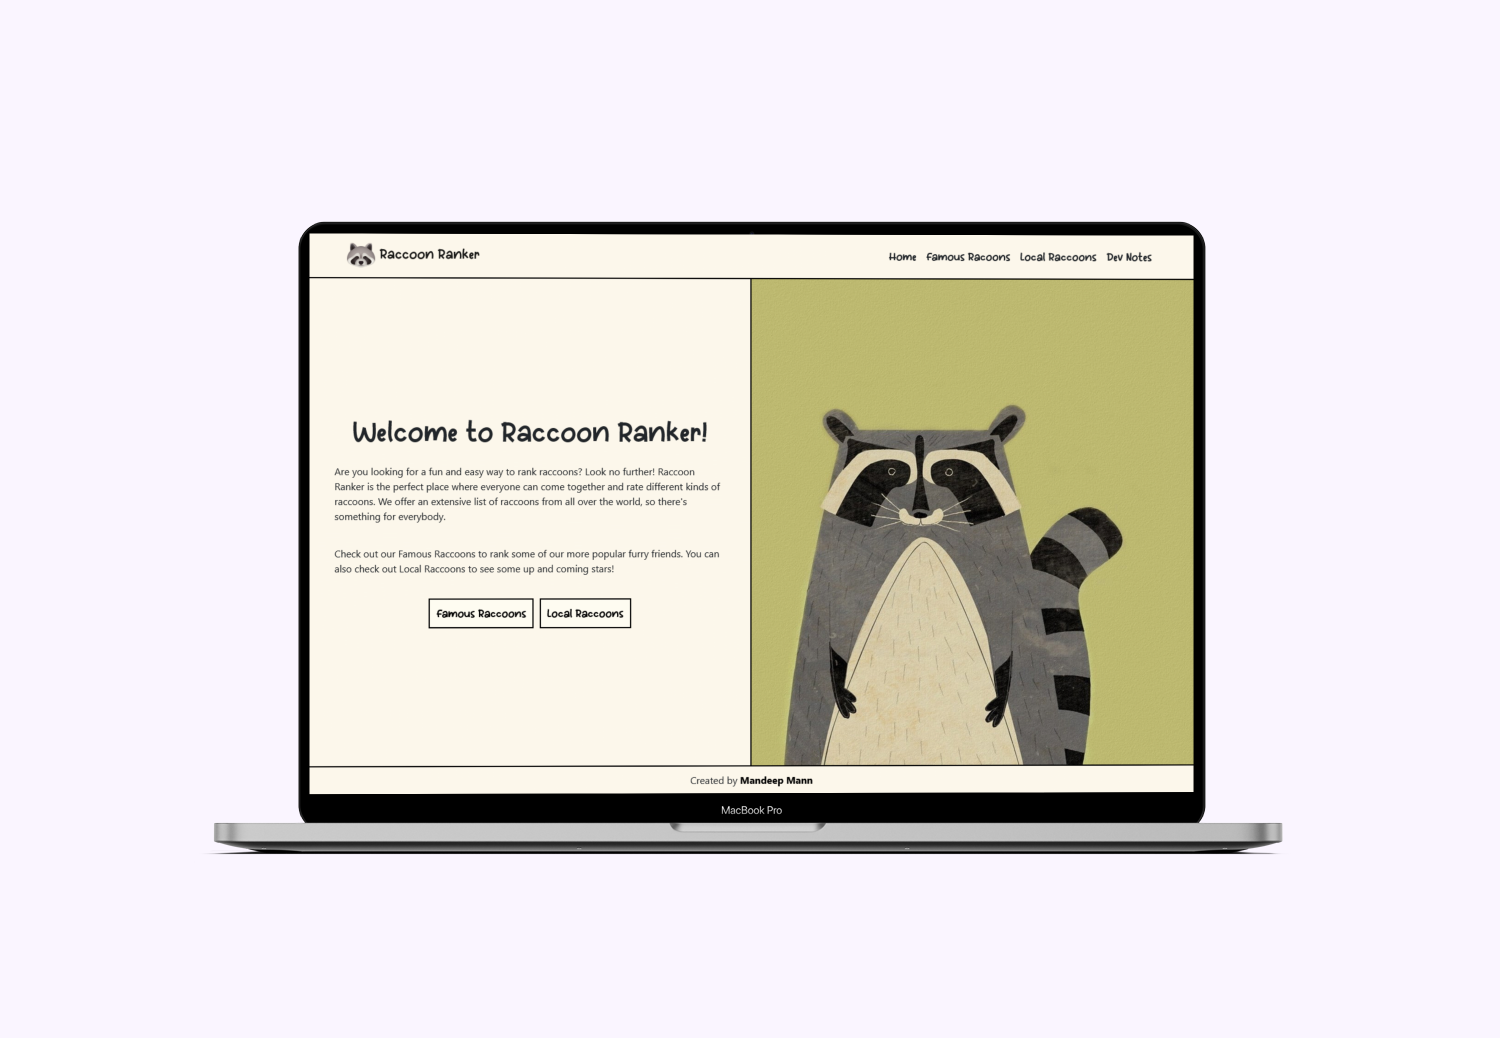 Macbook and iPhone mockup of Raccoon Ranker project